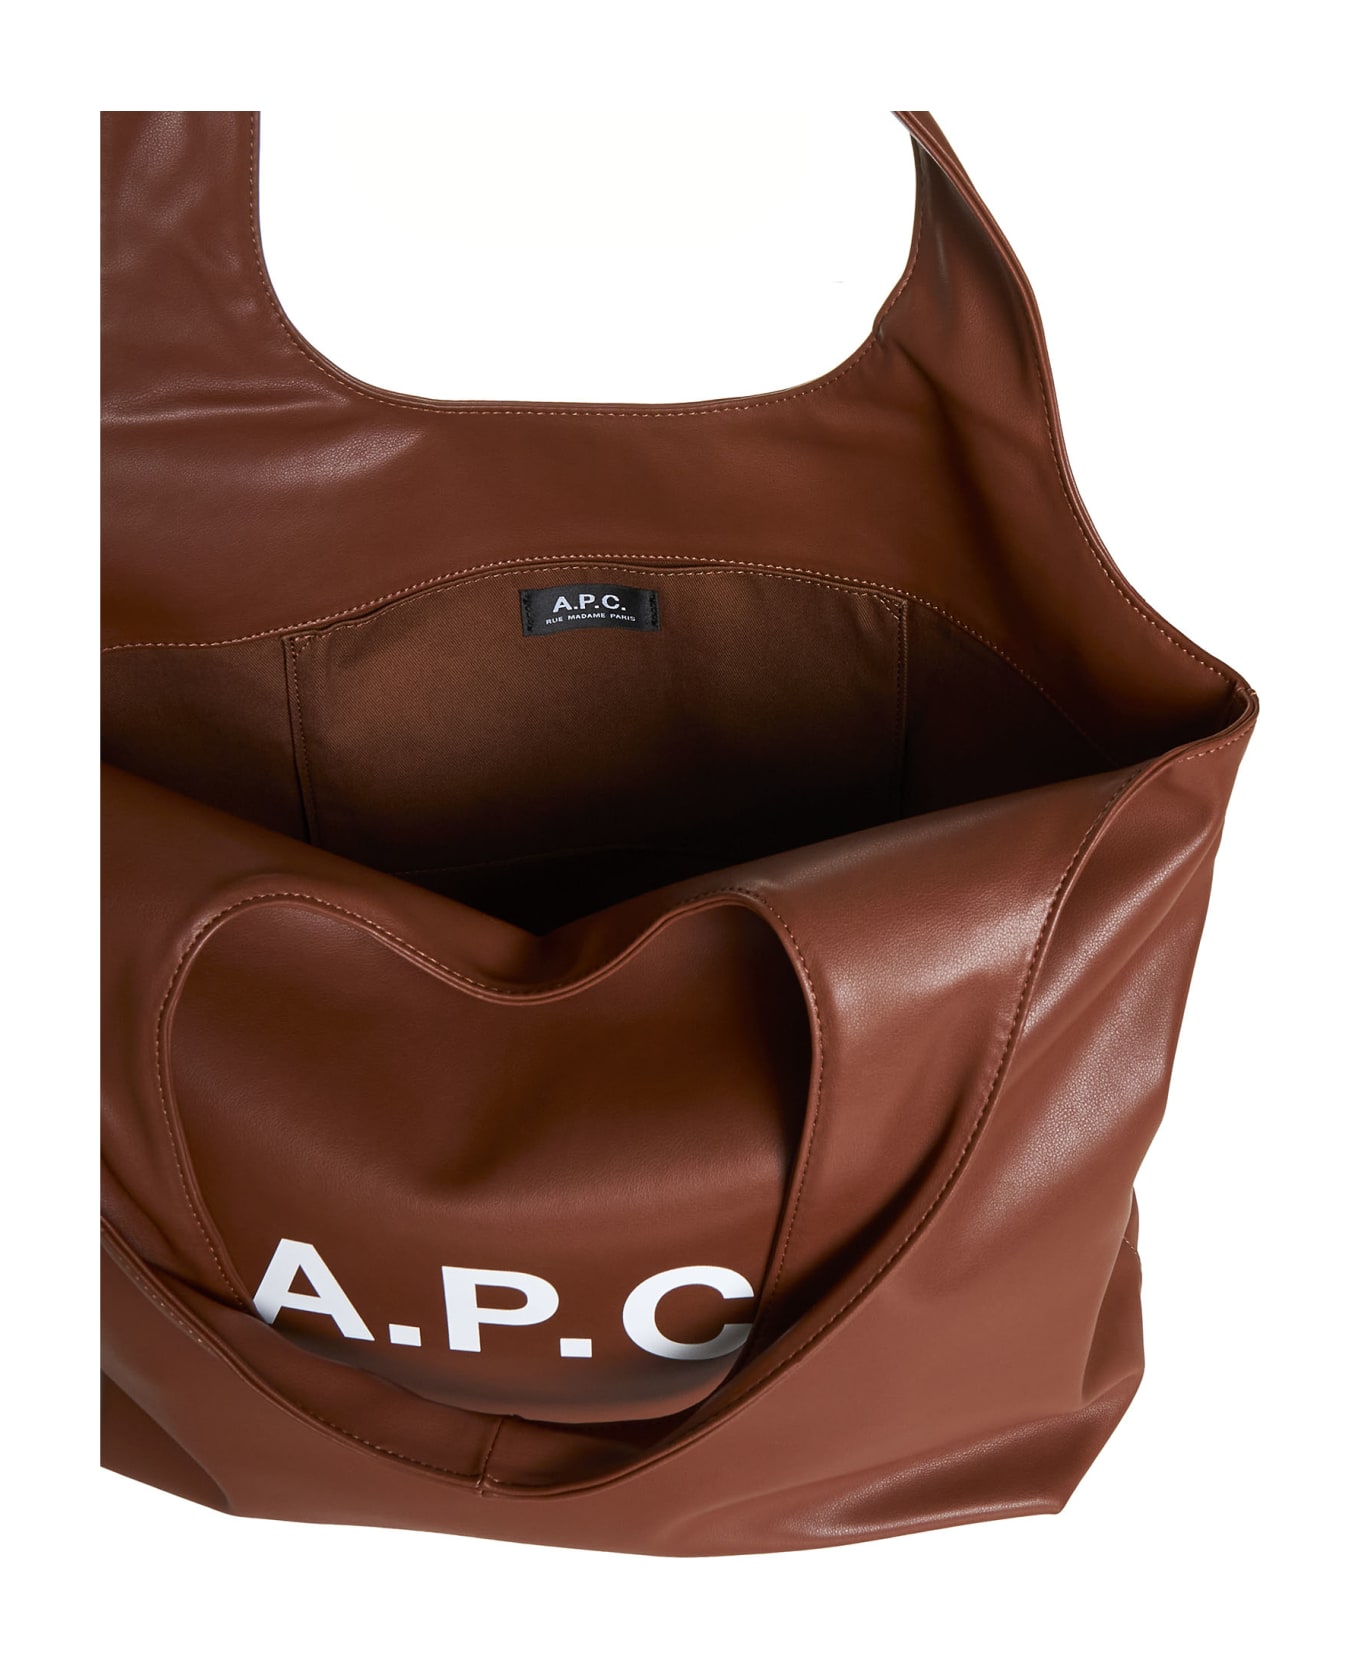 A.P.C. Ninon Tote Bag - NOISETTE